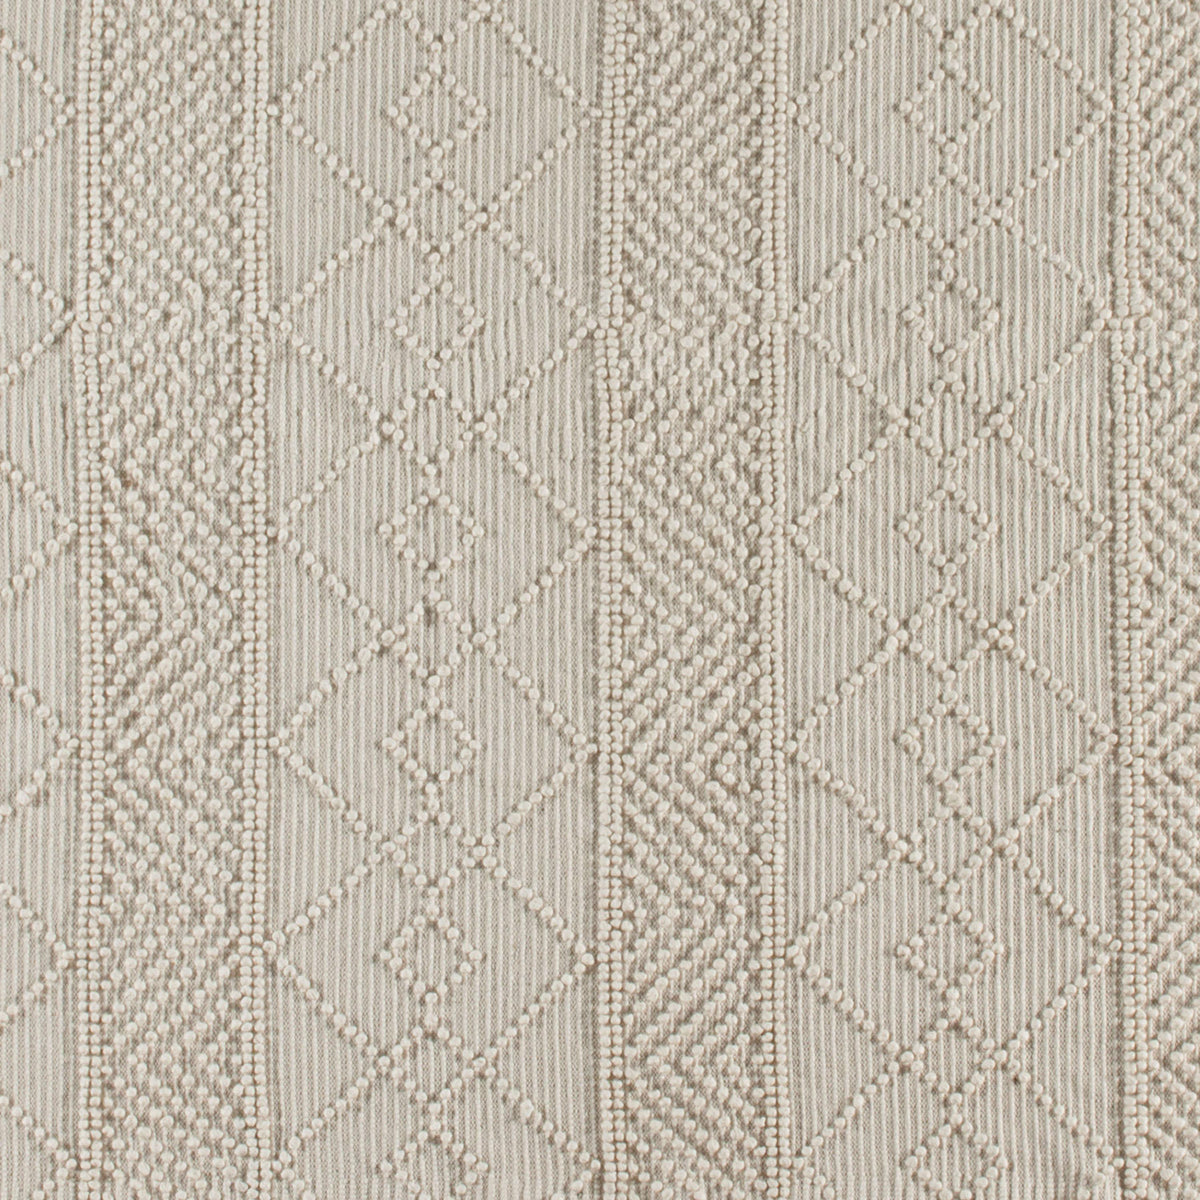 Gray/White,8' x 10' |#| 8' x 10' Triple Blend Ivory Handwoven Geometric Area Rug